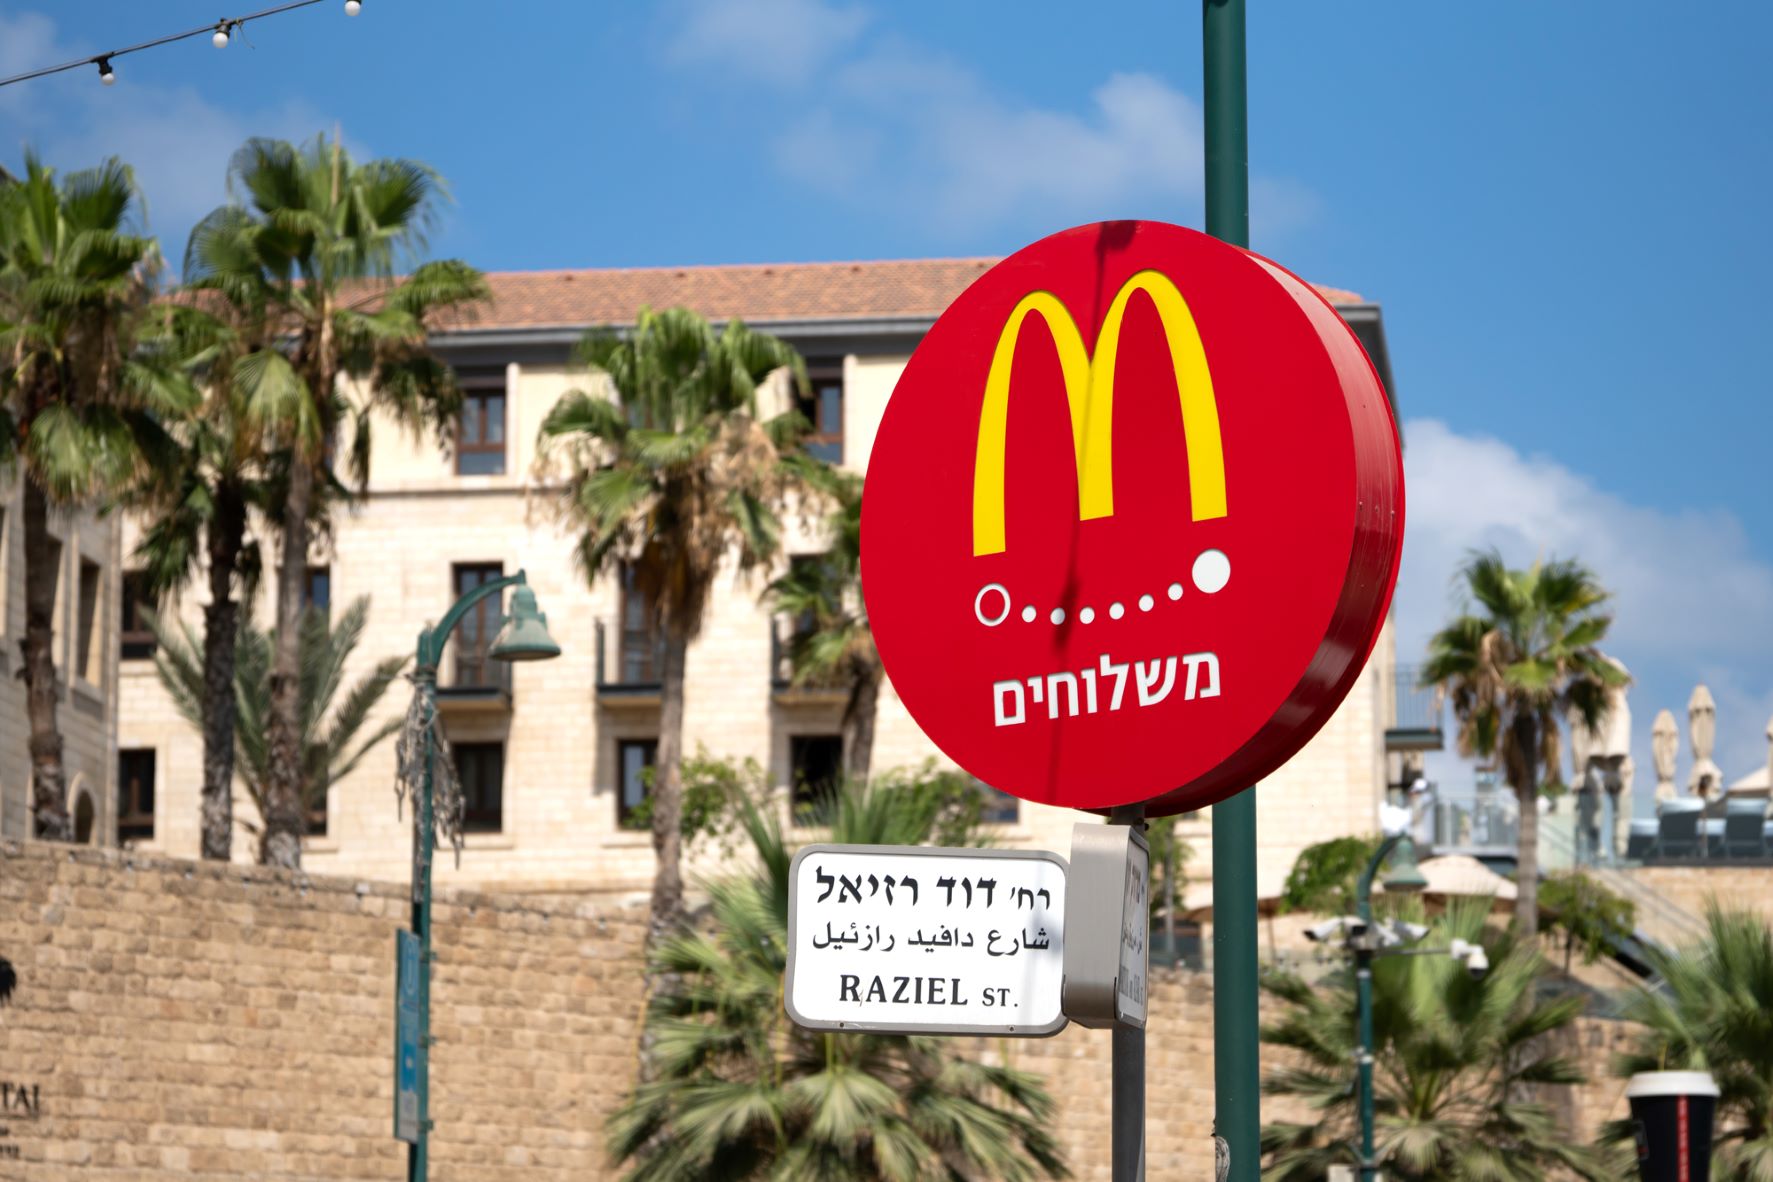 mcdonald’s-acquiring-israeli-franchise-won’t-stop-the-boycott-momentum